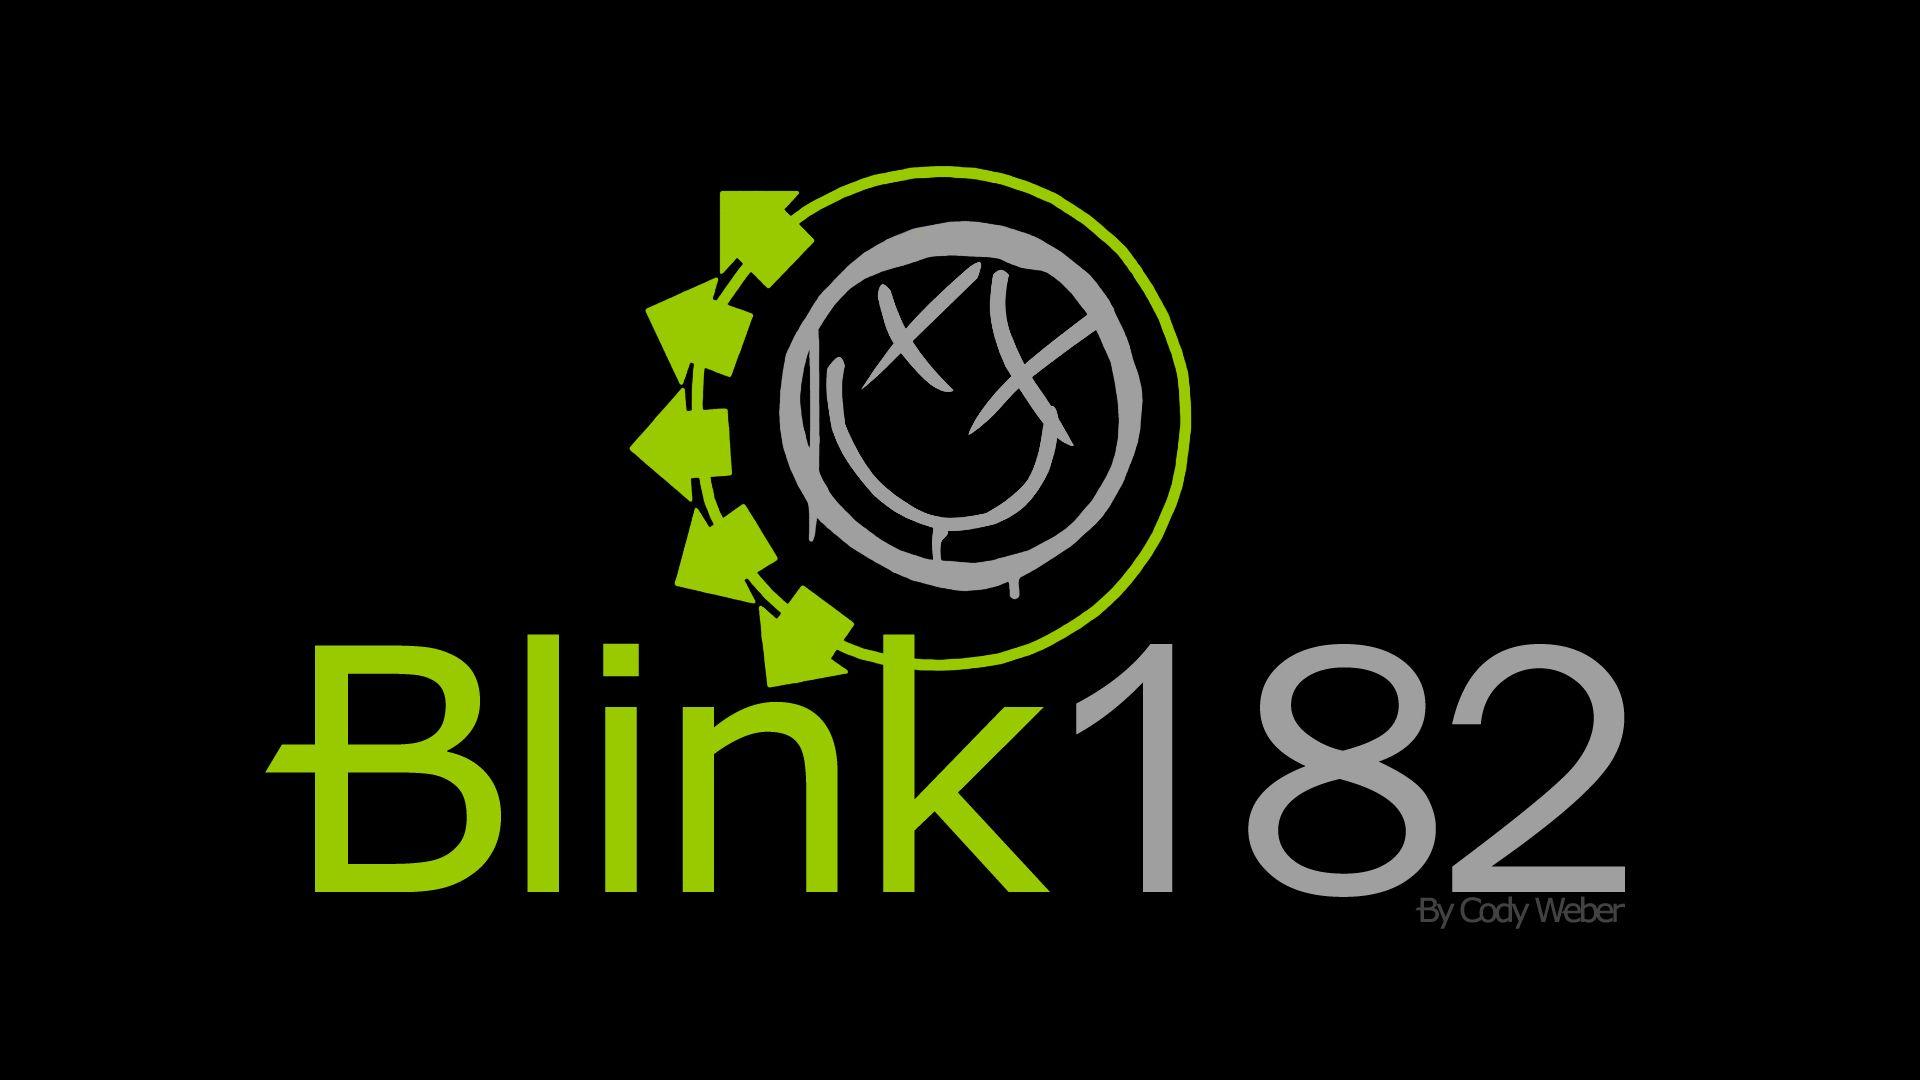 Blink 182 Logo Wallpaper Download HD Wallpaper Widescreen. Places